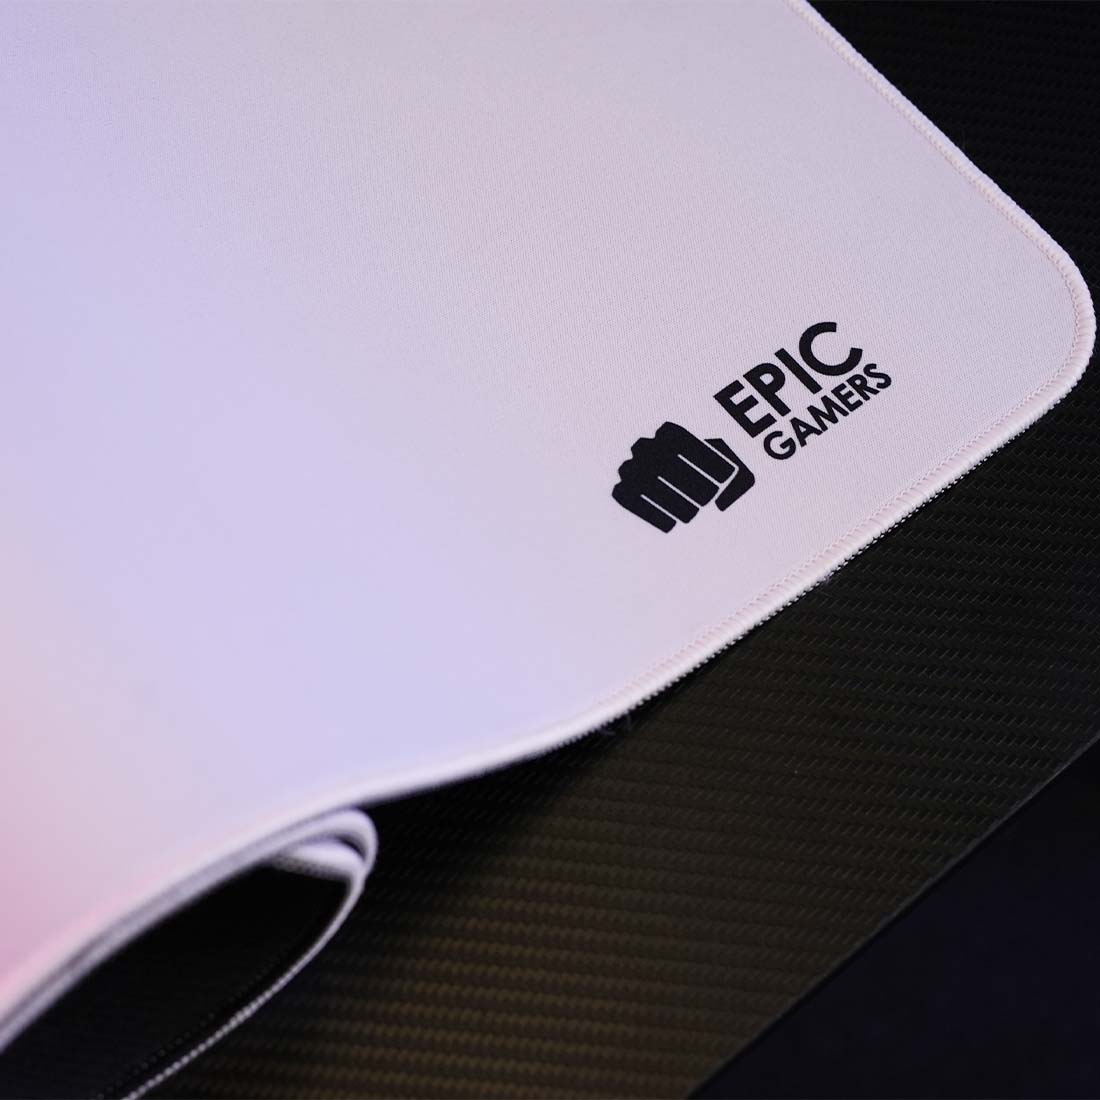 Epic Gamers V2 Gaming Mouse Pad - White - حصيرة الفأرة